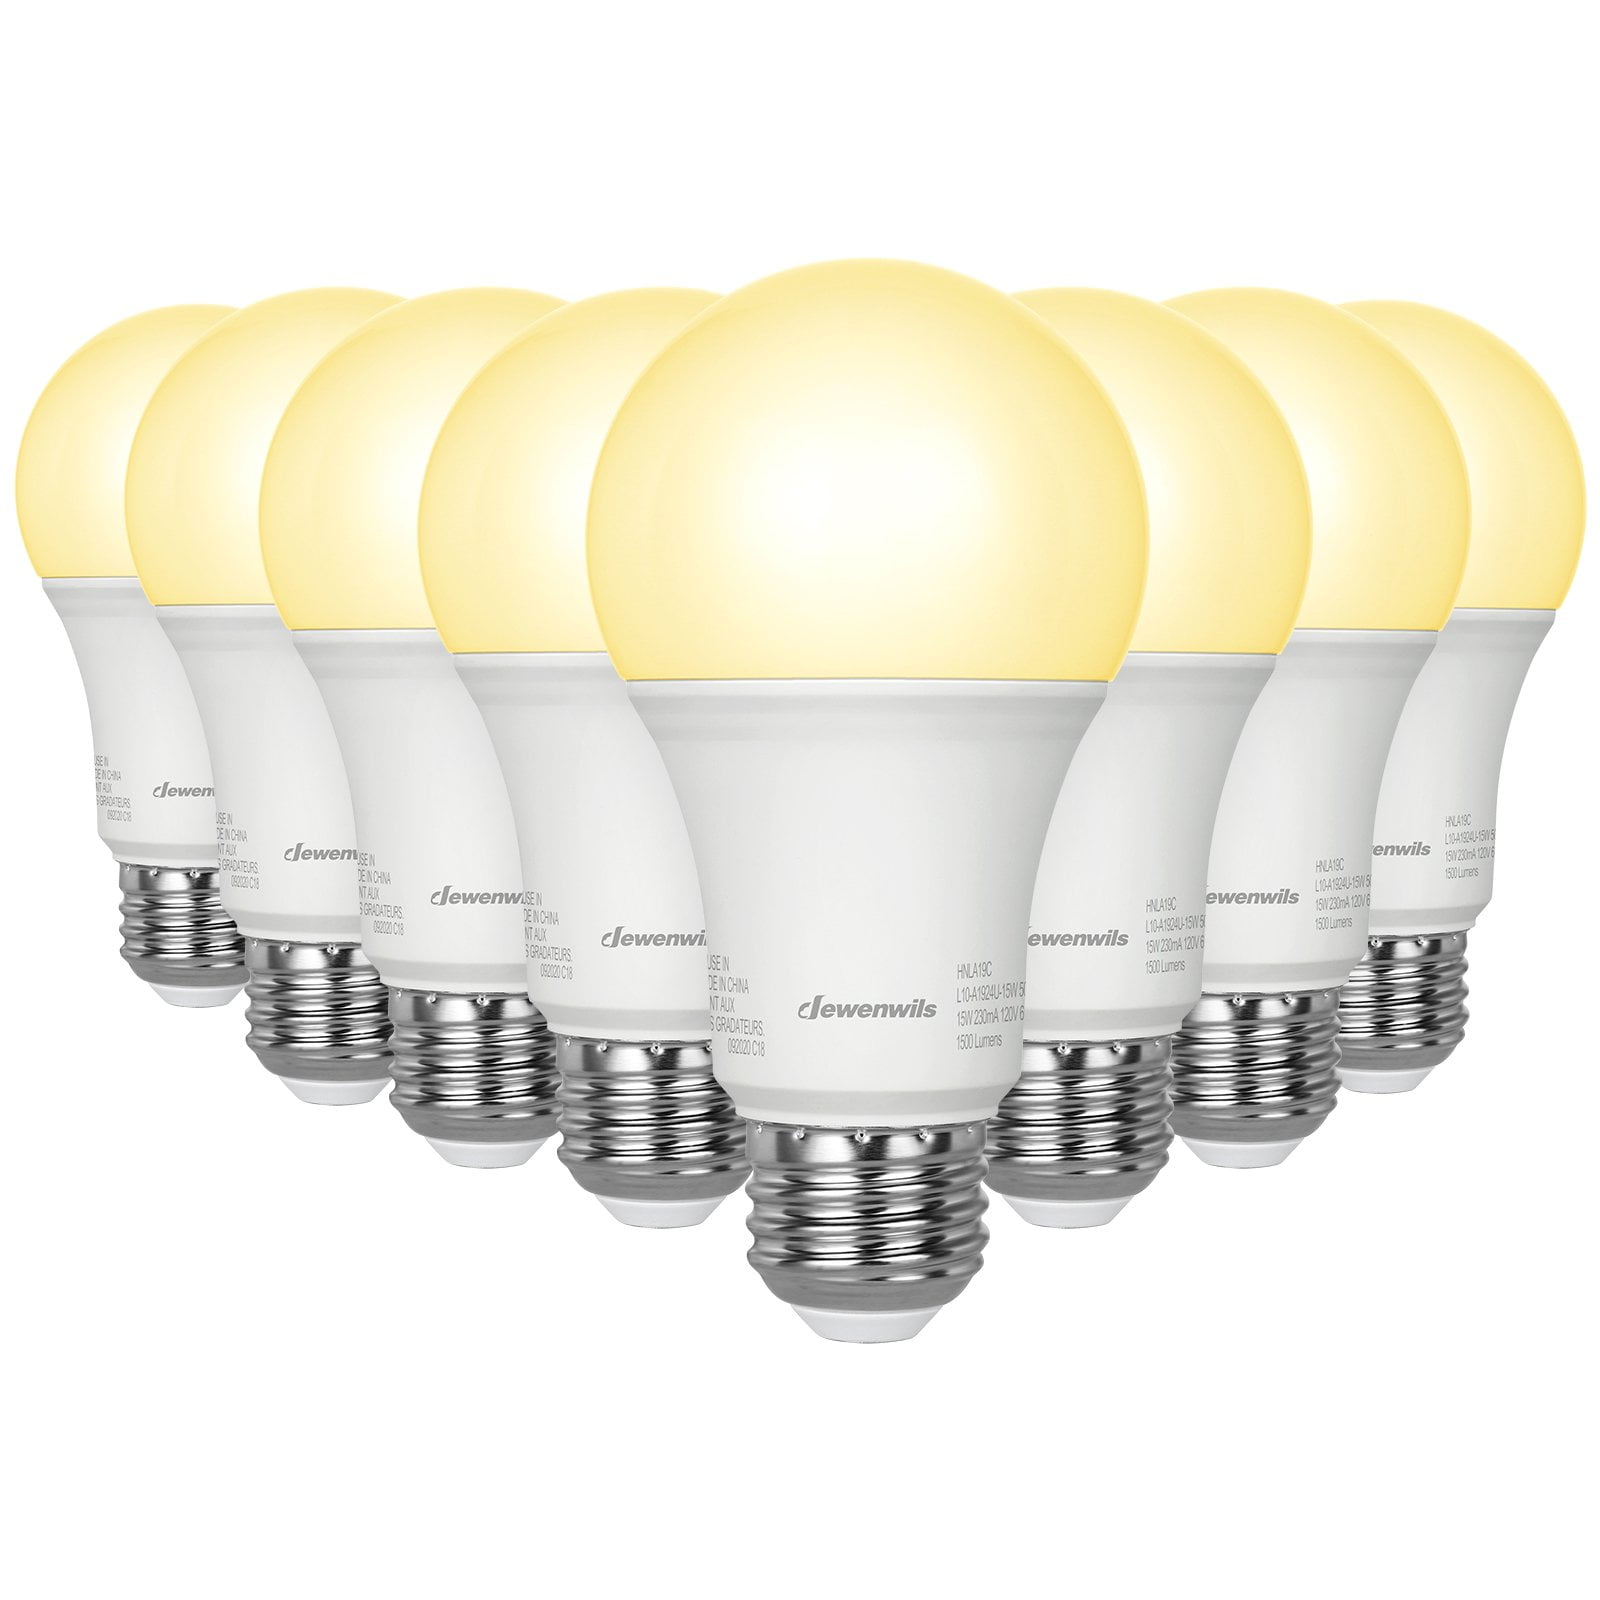 DEWENWILS LED Light Bulb 100 3000K Soft Warm White, 14W 1500LM LED Bulbs E26 Base 8-Pack - Walmart.com